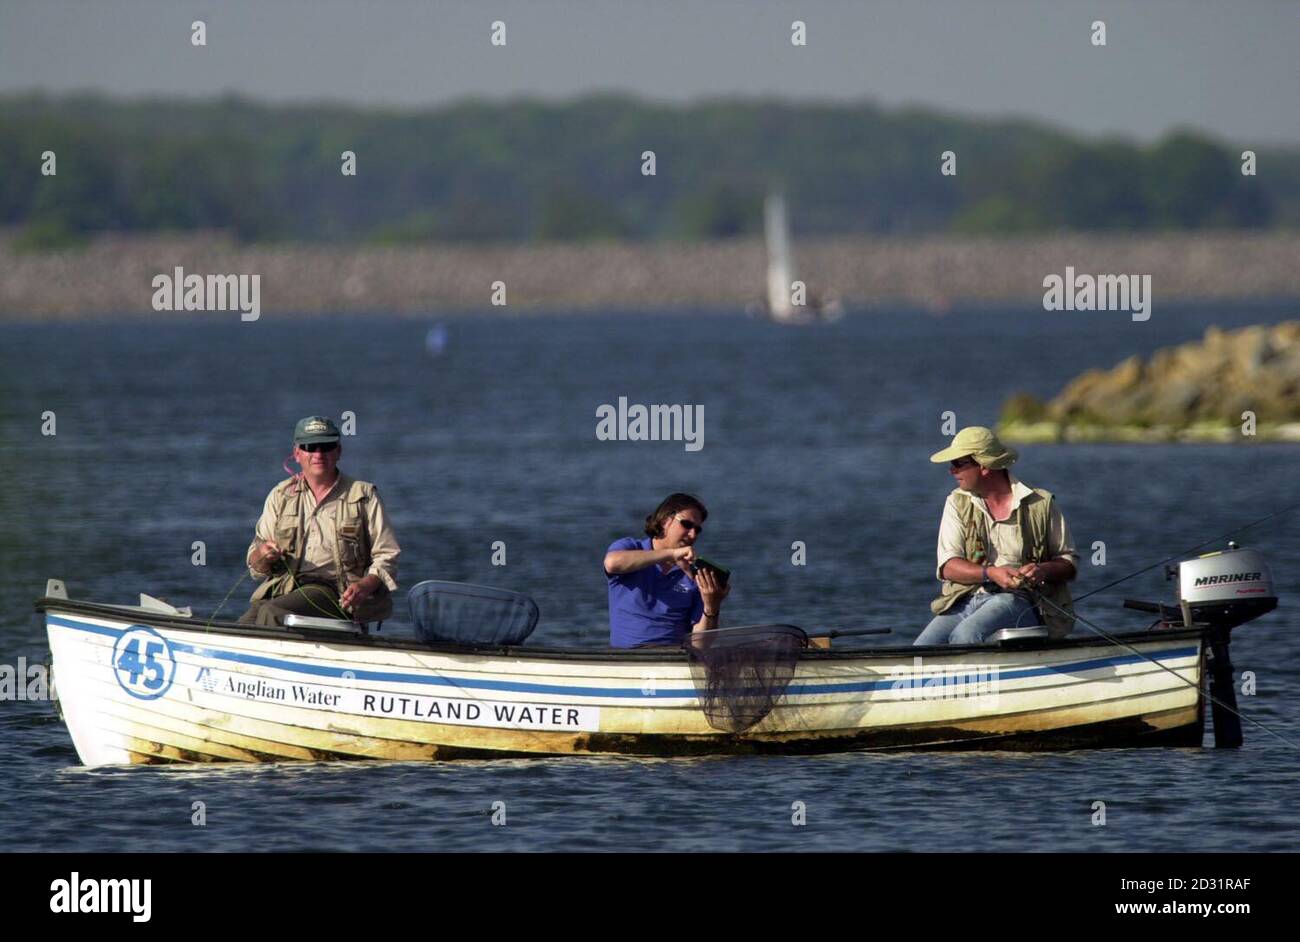 Three men take advantage of the recent warm weather at Rutland water. Stock Photo